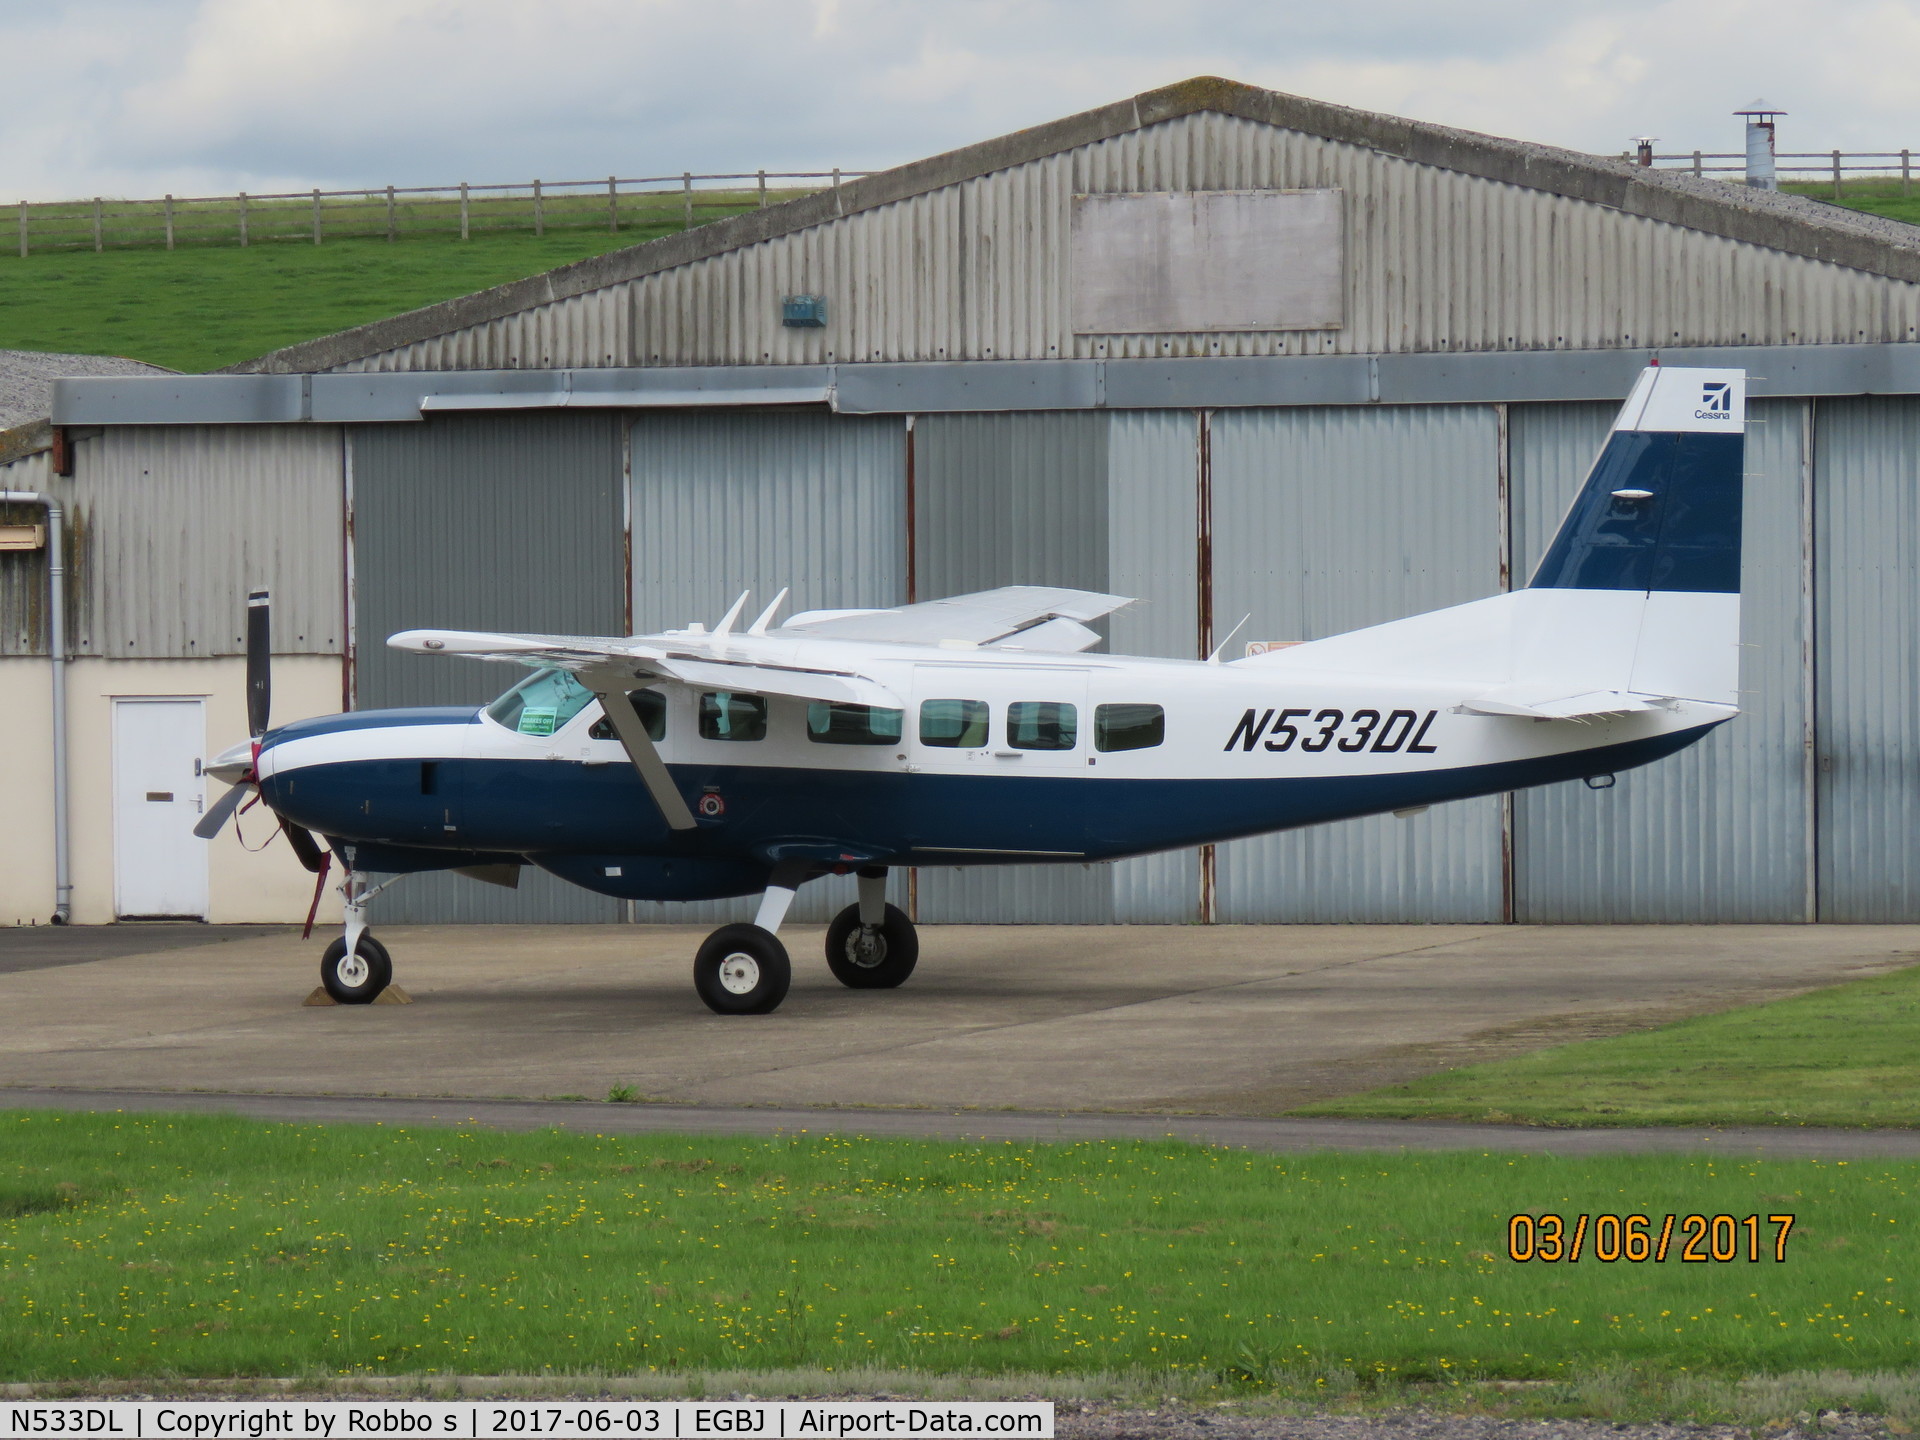 N533DL, 2011 Cessna 208B Grand Caravan C/N 20800533, N533DL Cessna 208 seen at Staverton Airport.